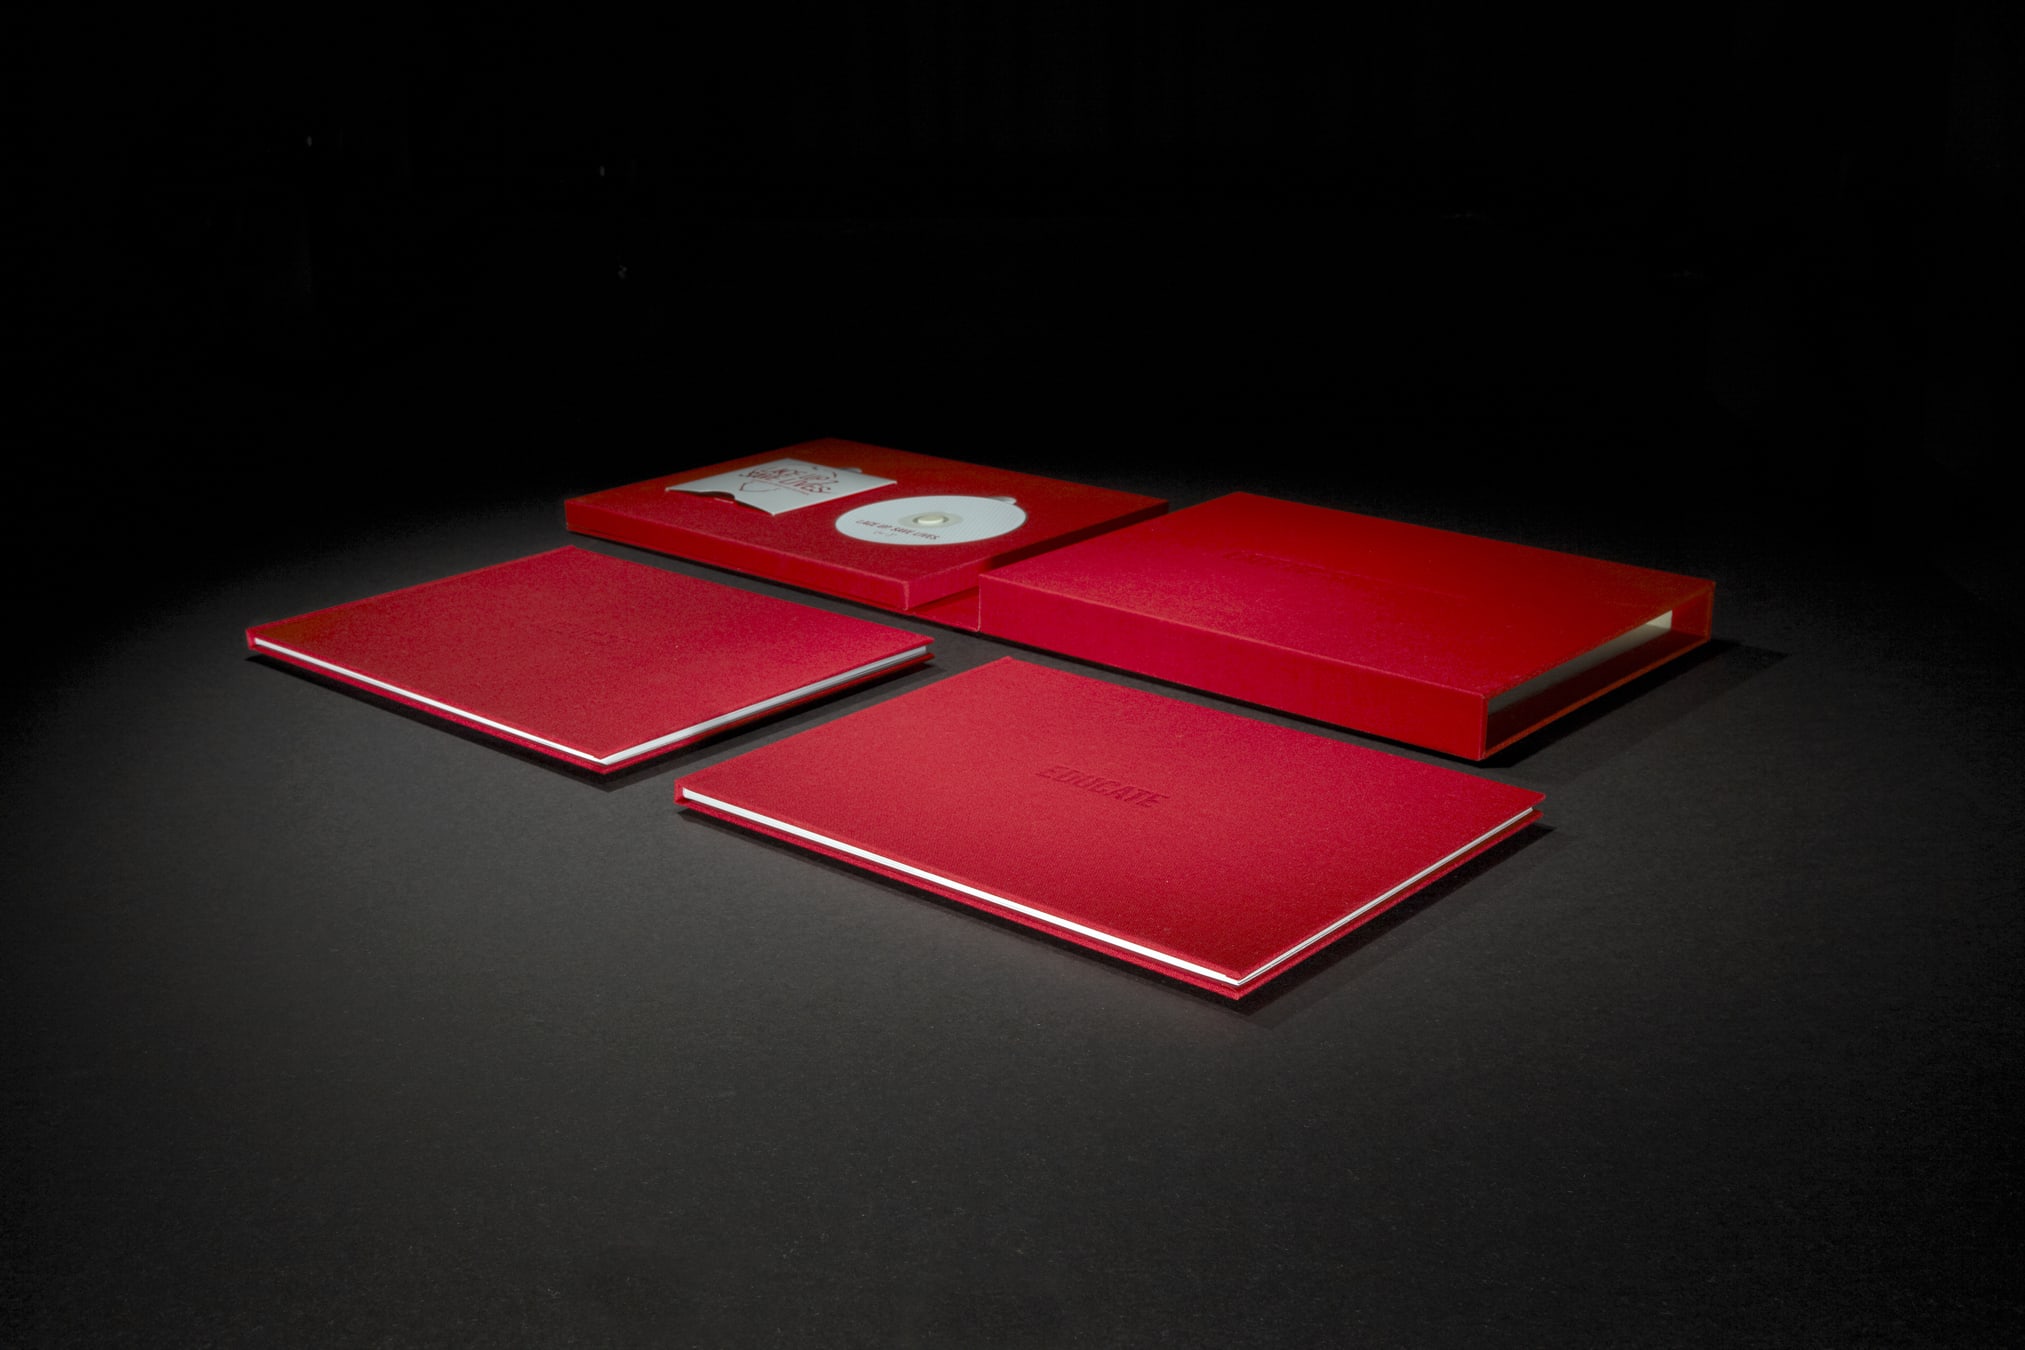 NIKE Red book design open